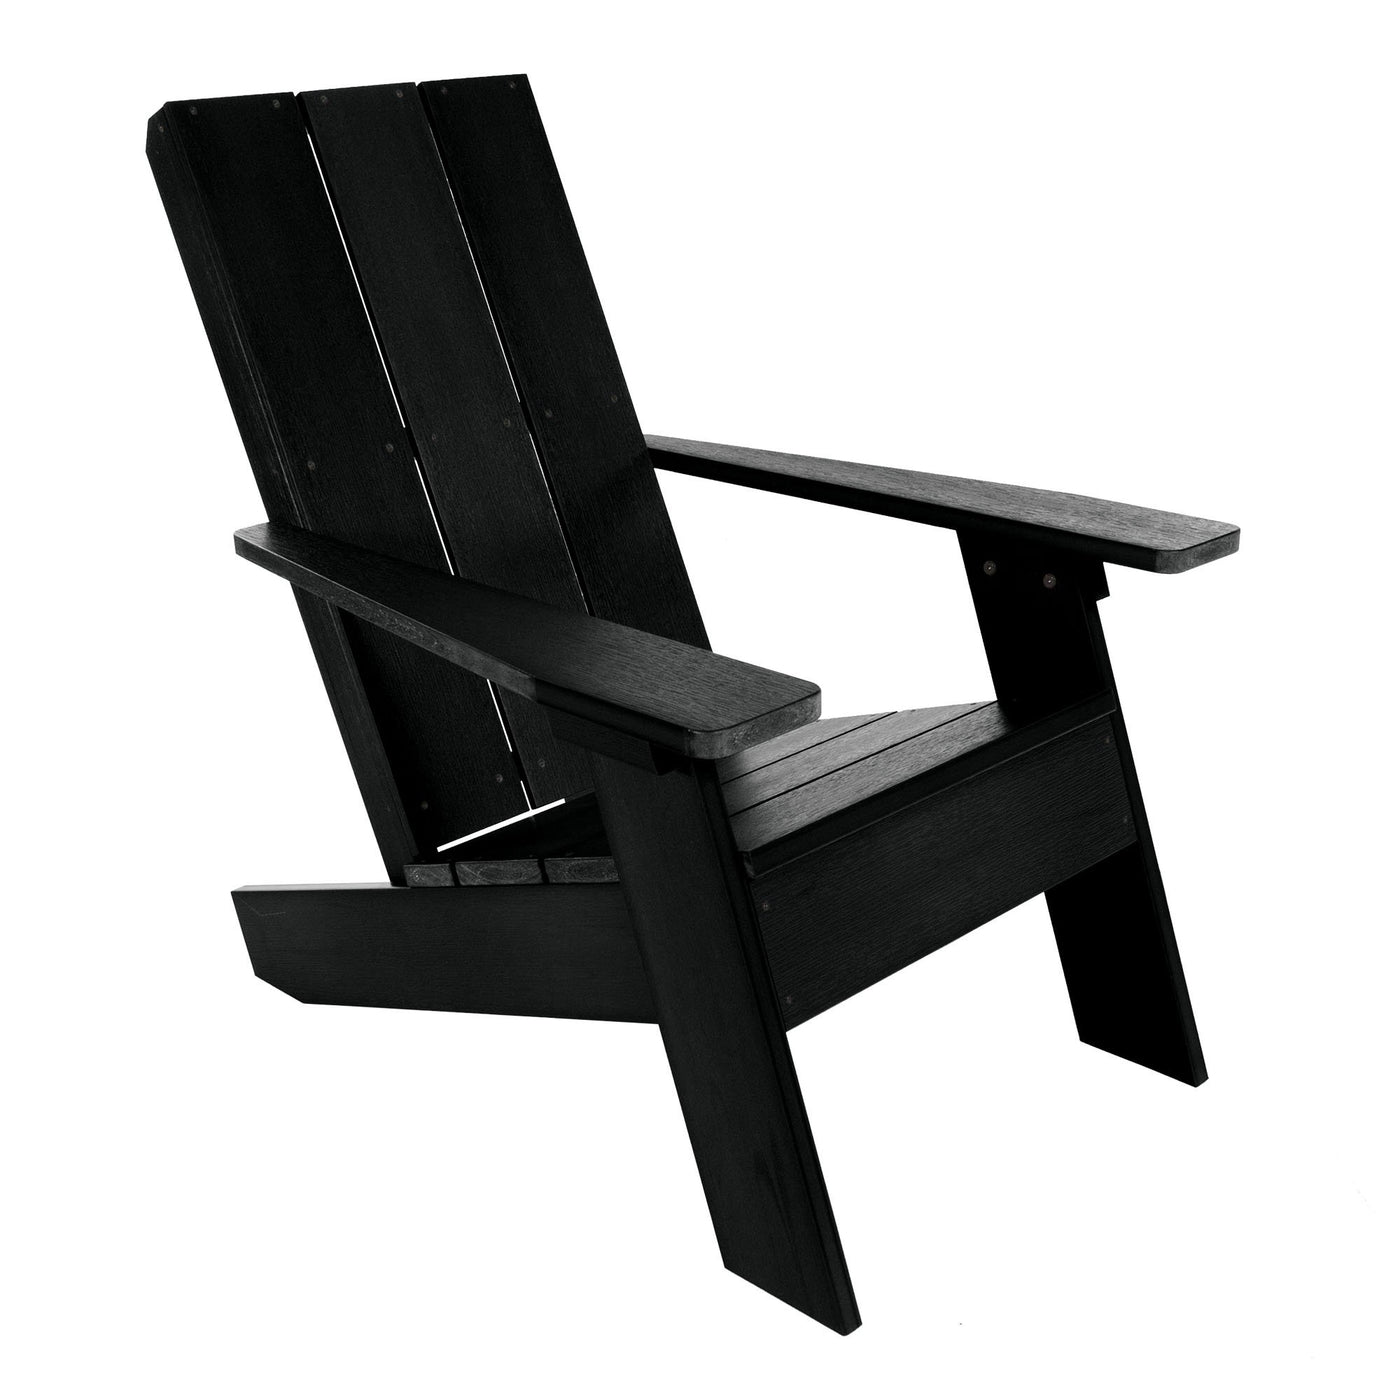 Italica Modern Adirondack chair in Black. 